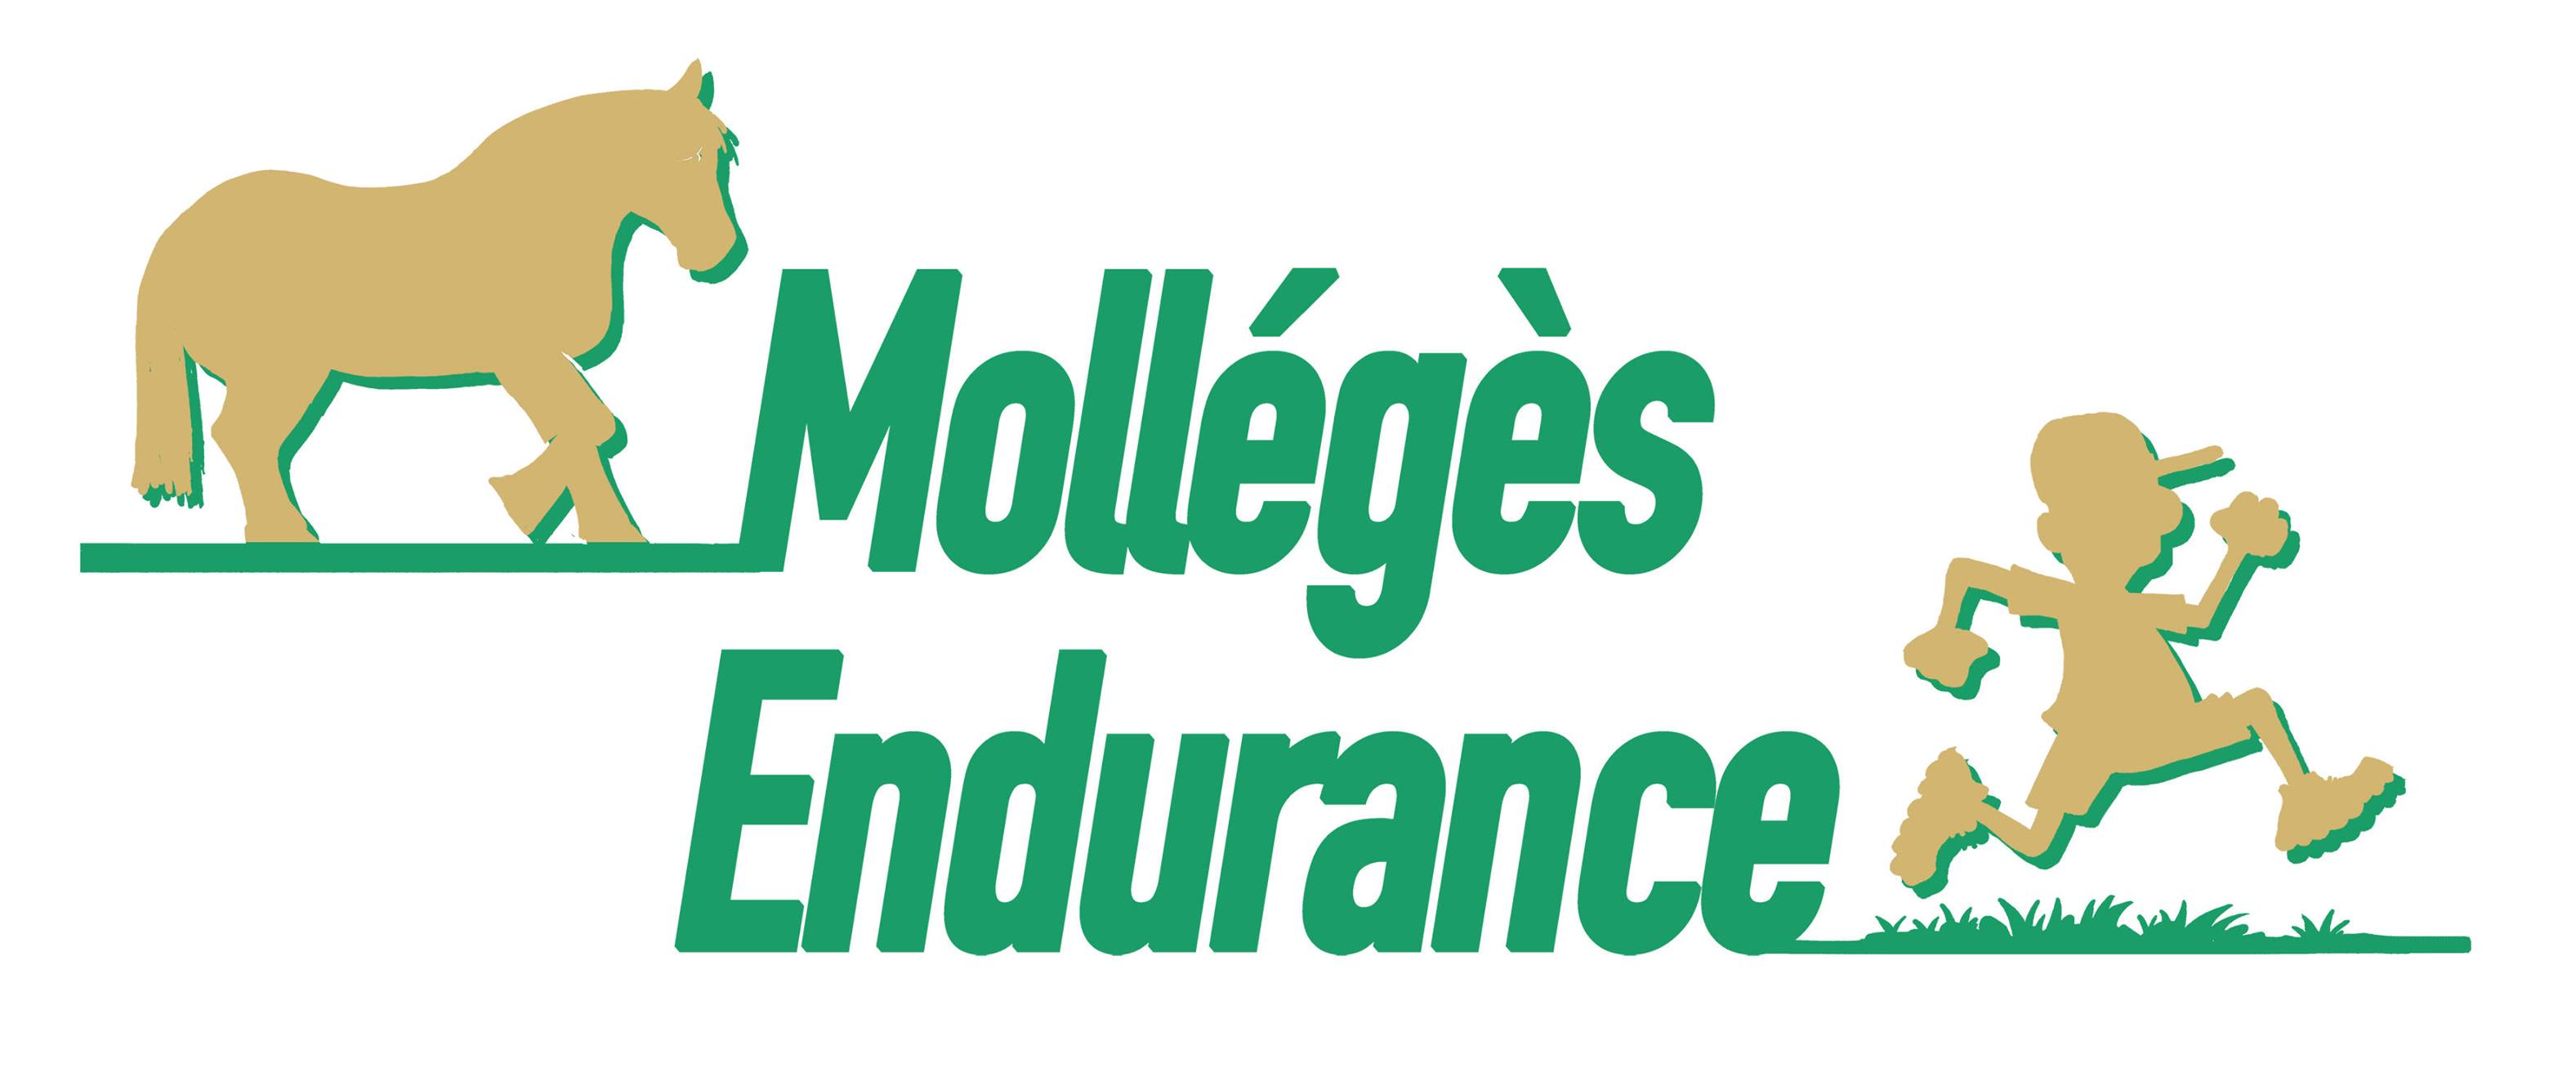 assos_molleges endurance.jpg